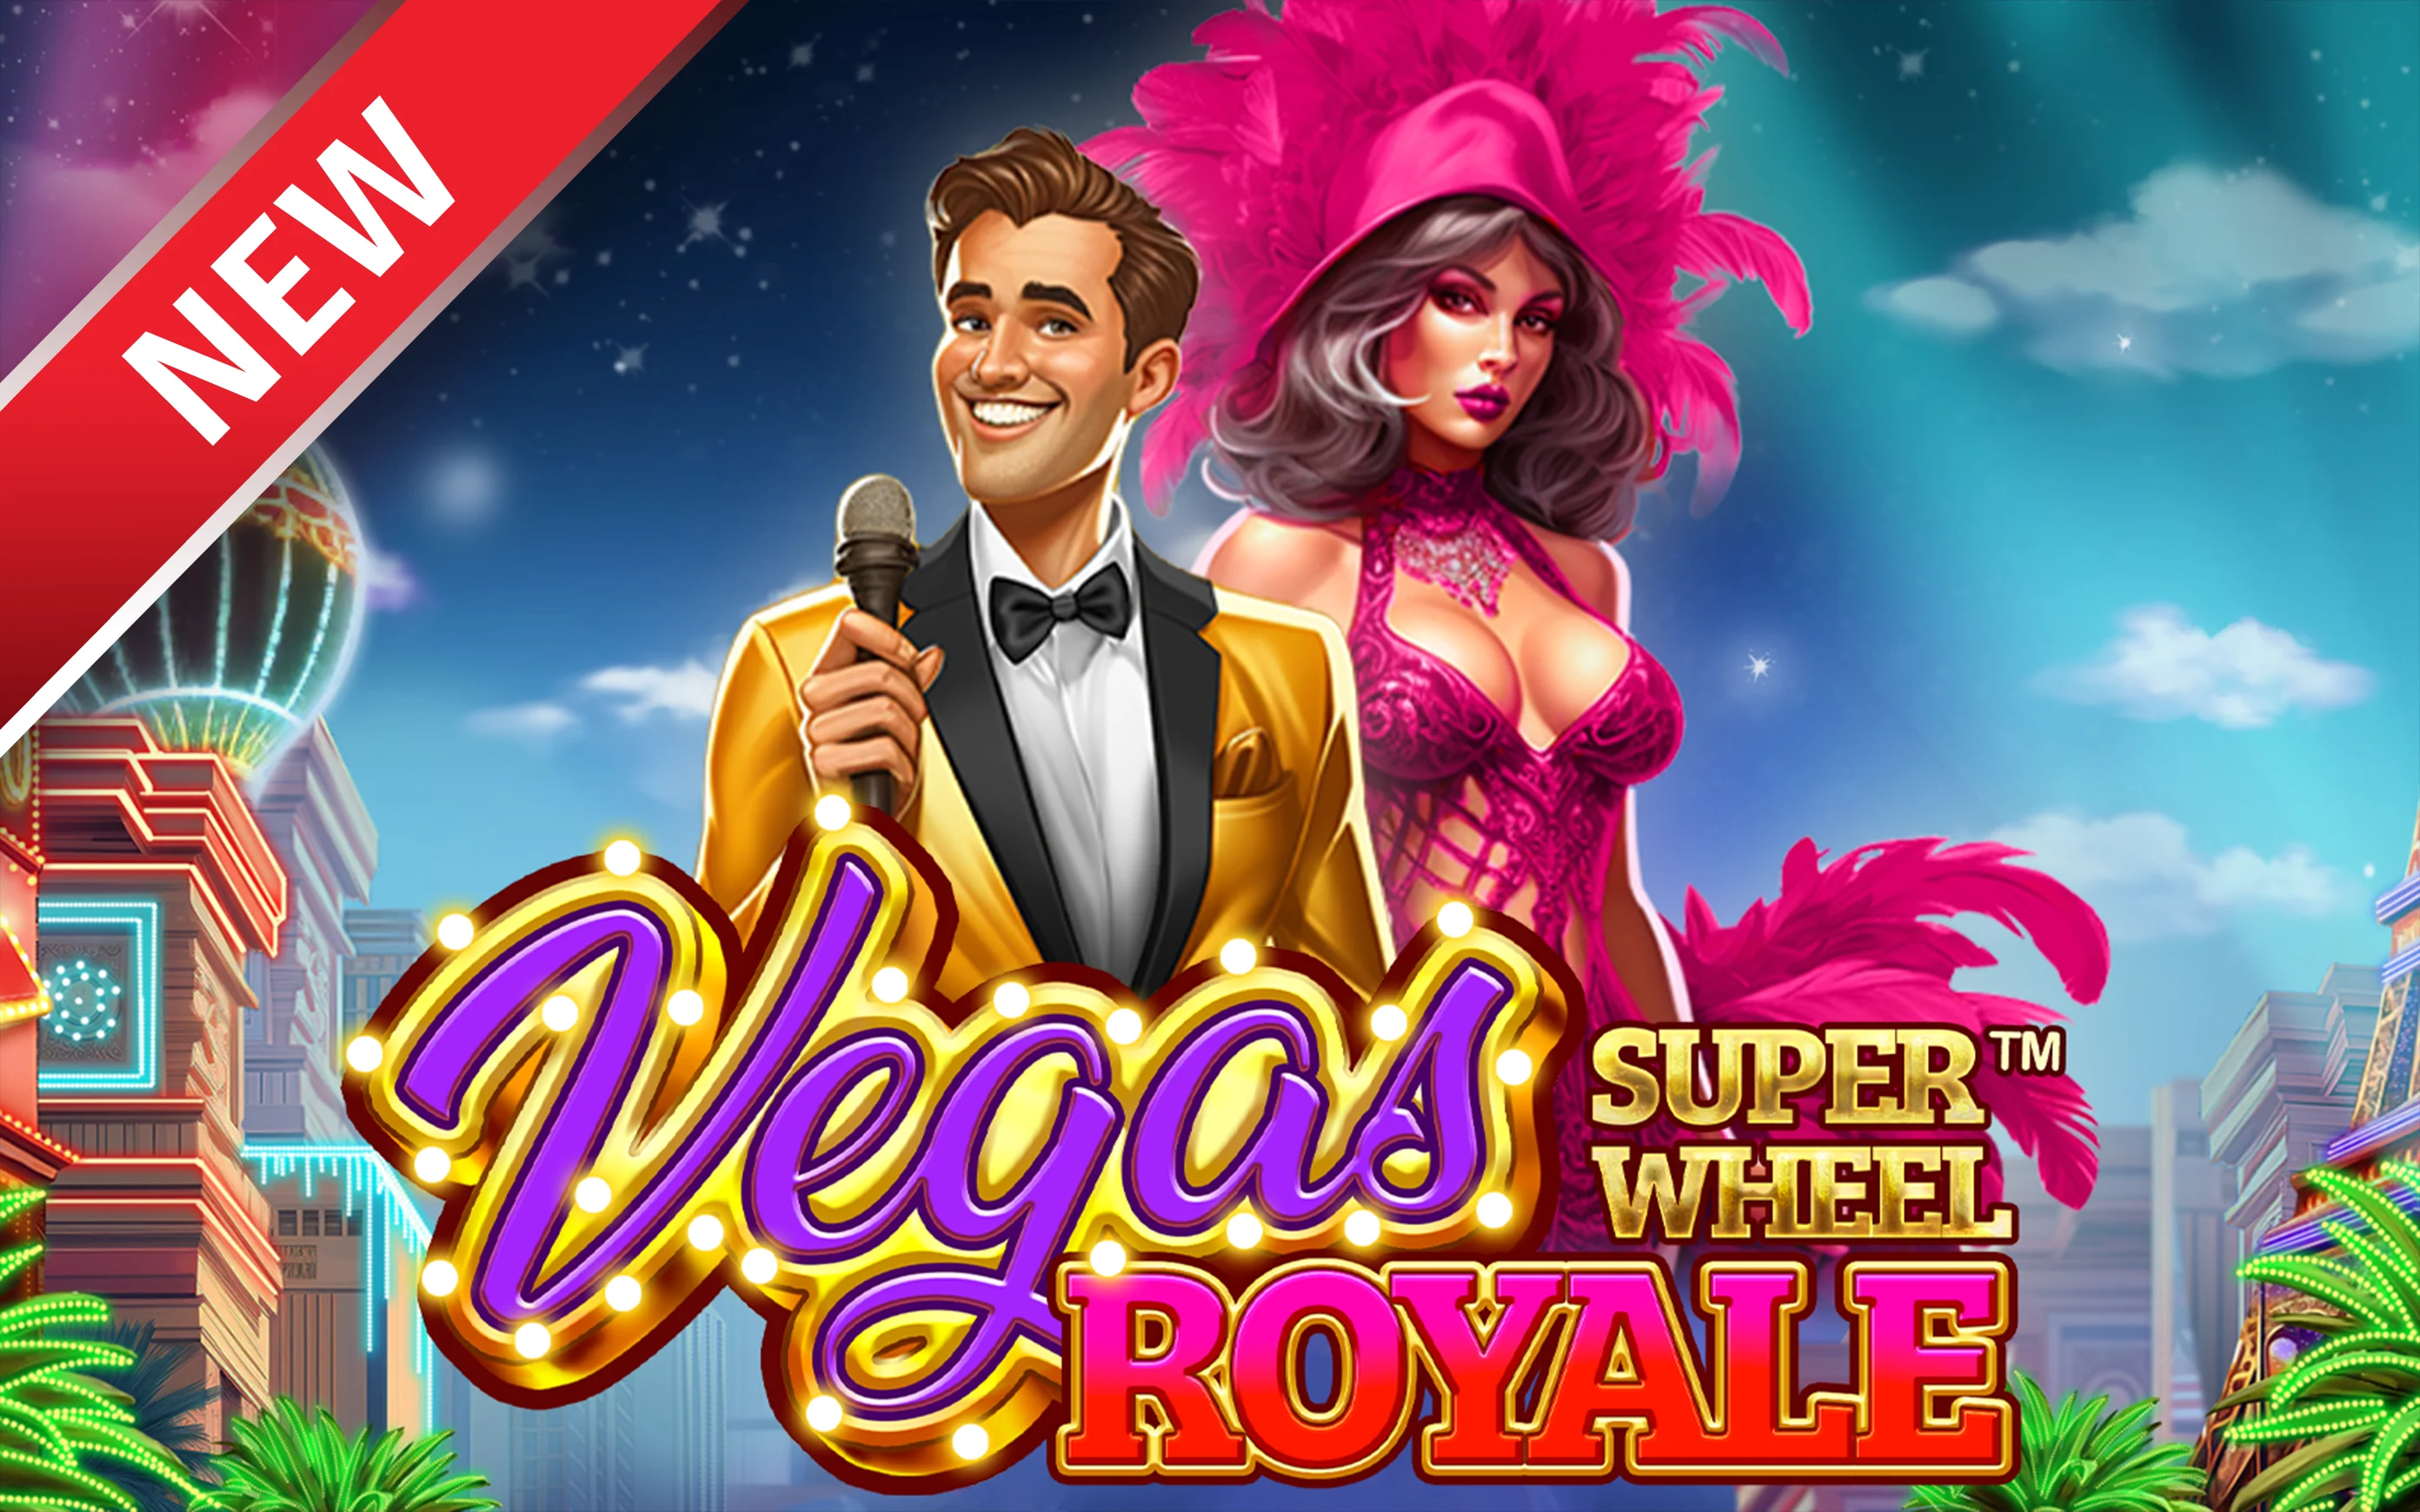 Грайте у Vegas Royale Super Wheel™ в онлайн-казино Starcasino.be